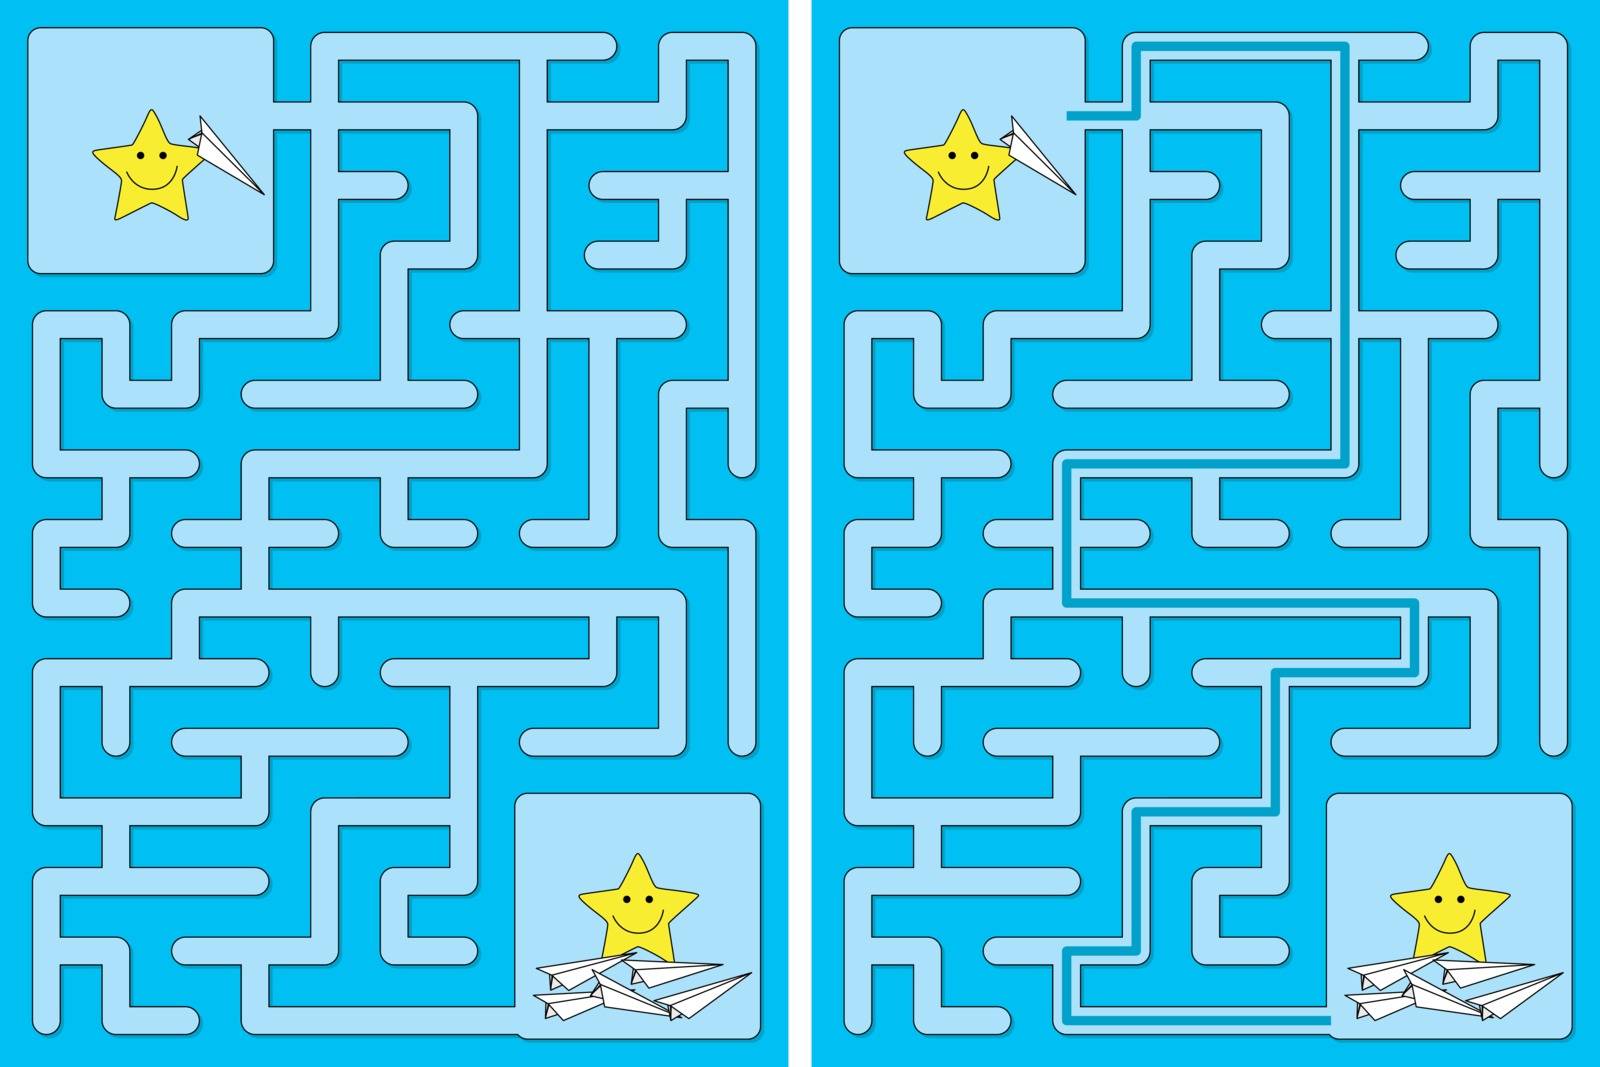 Easy little stars maze by nahhan